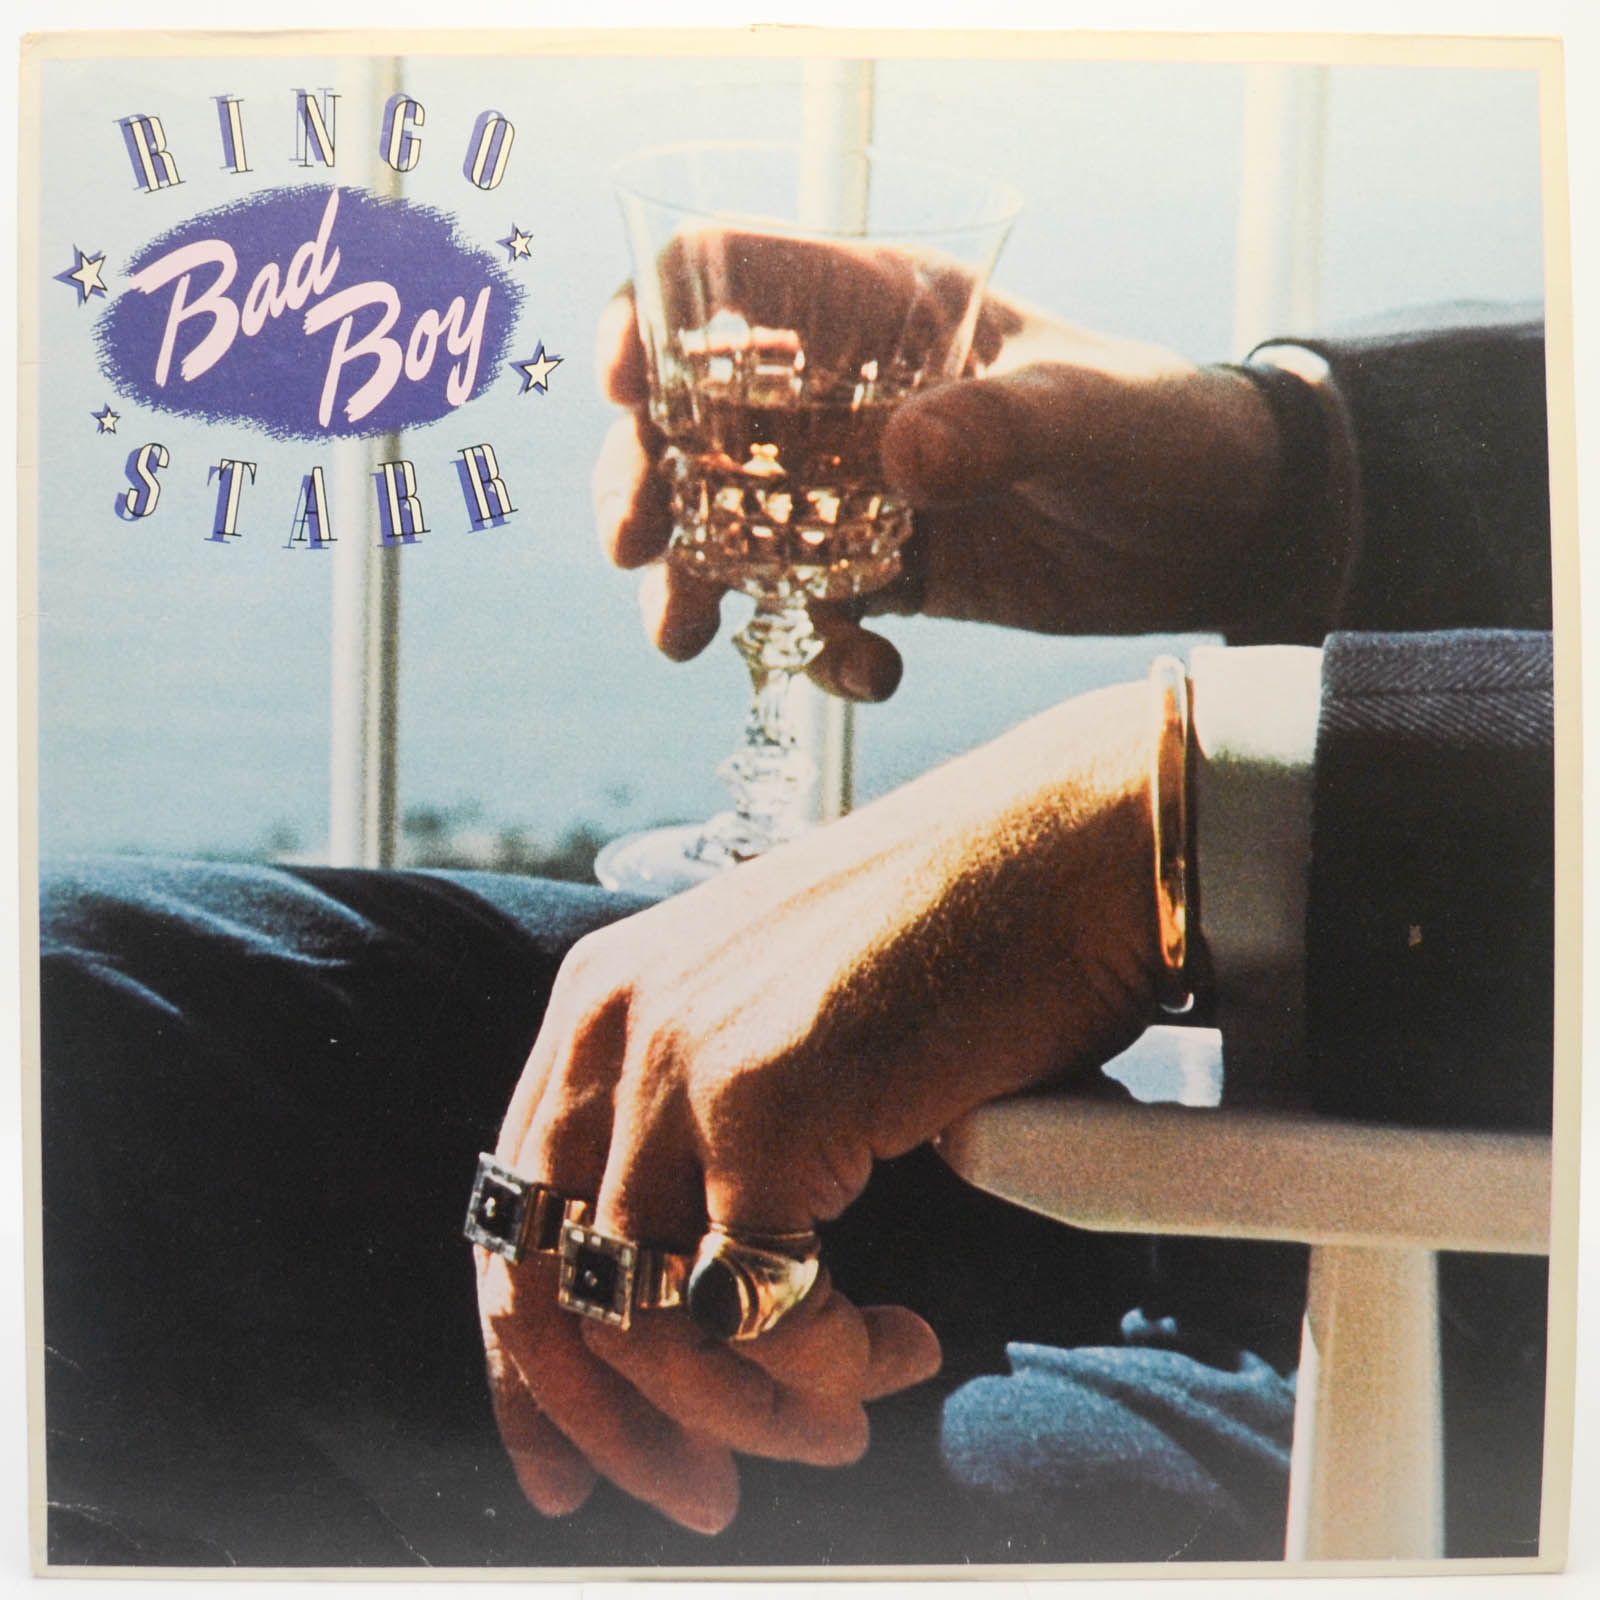 Ringo Starr — Bad Boy, 1978